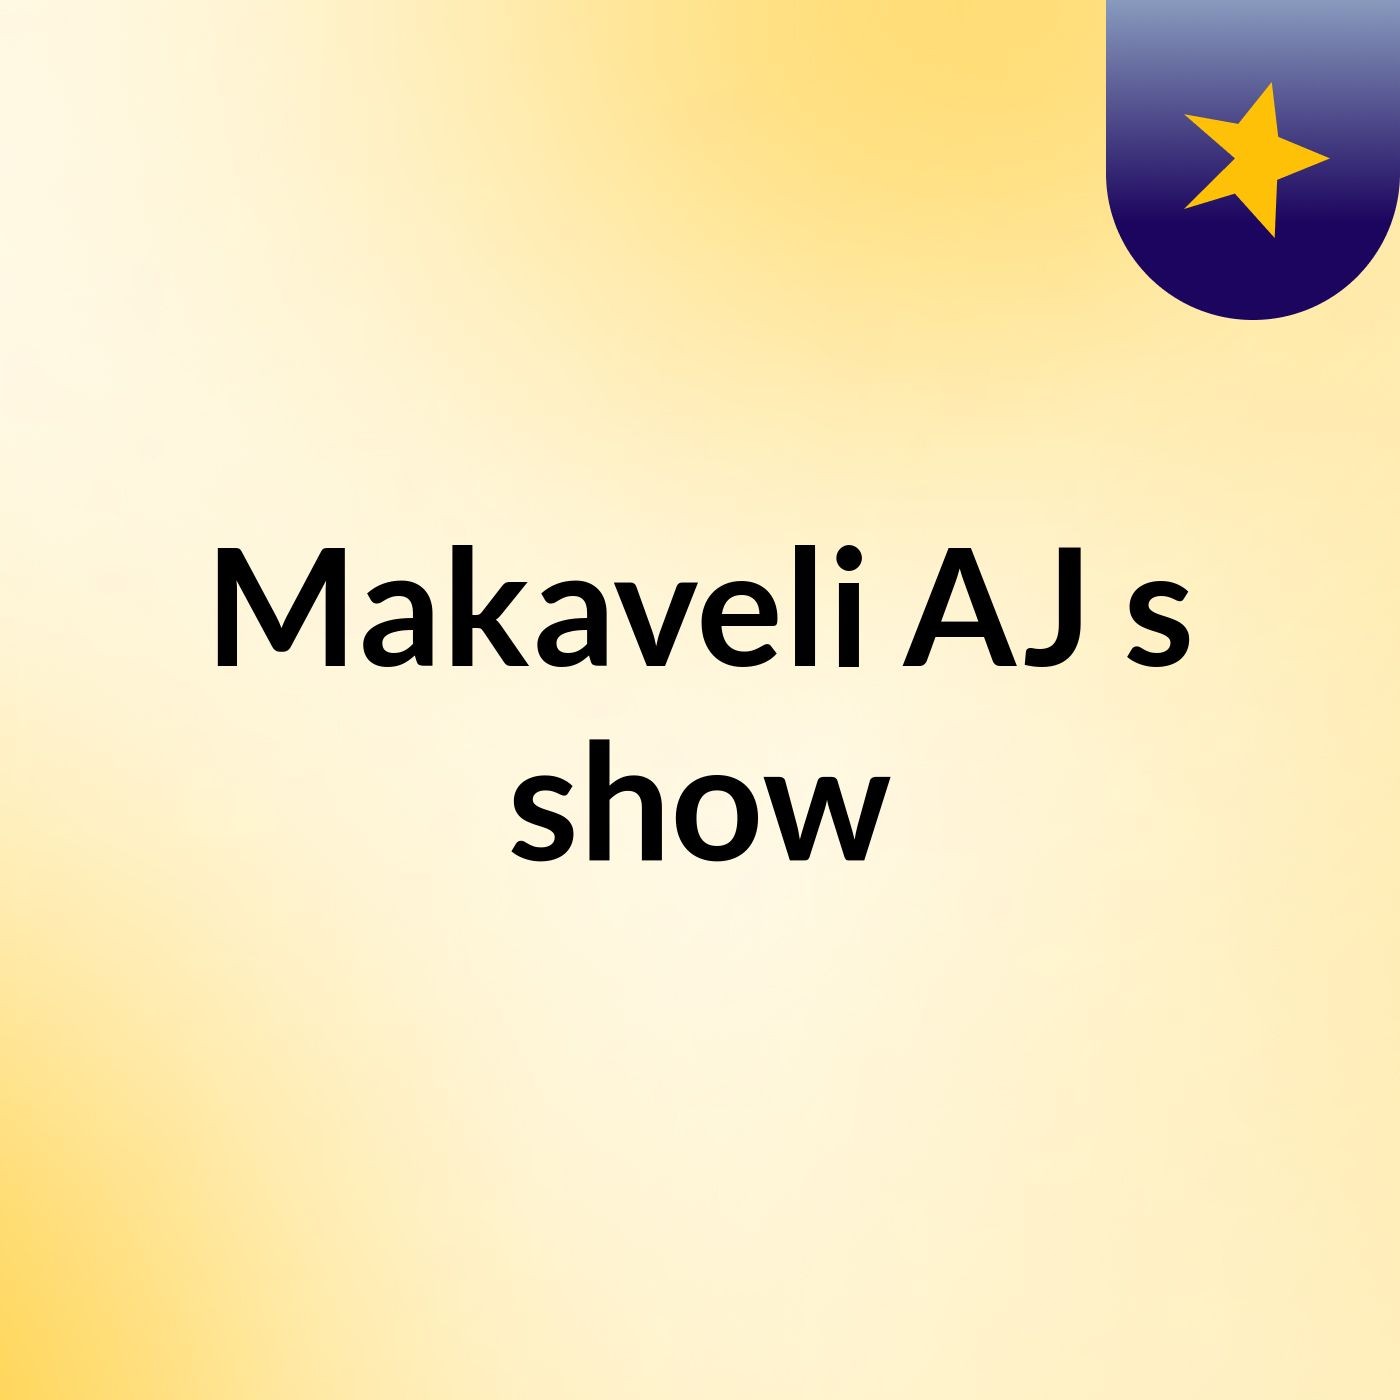 Makaveli AJ's show